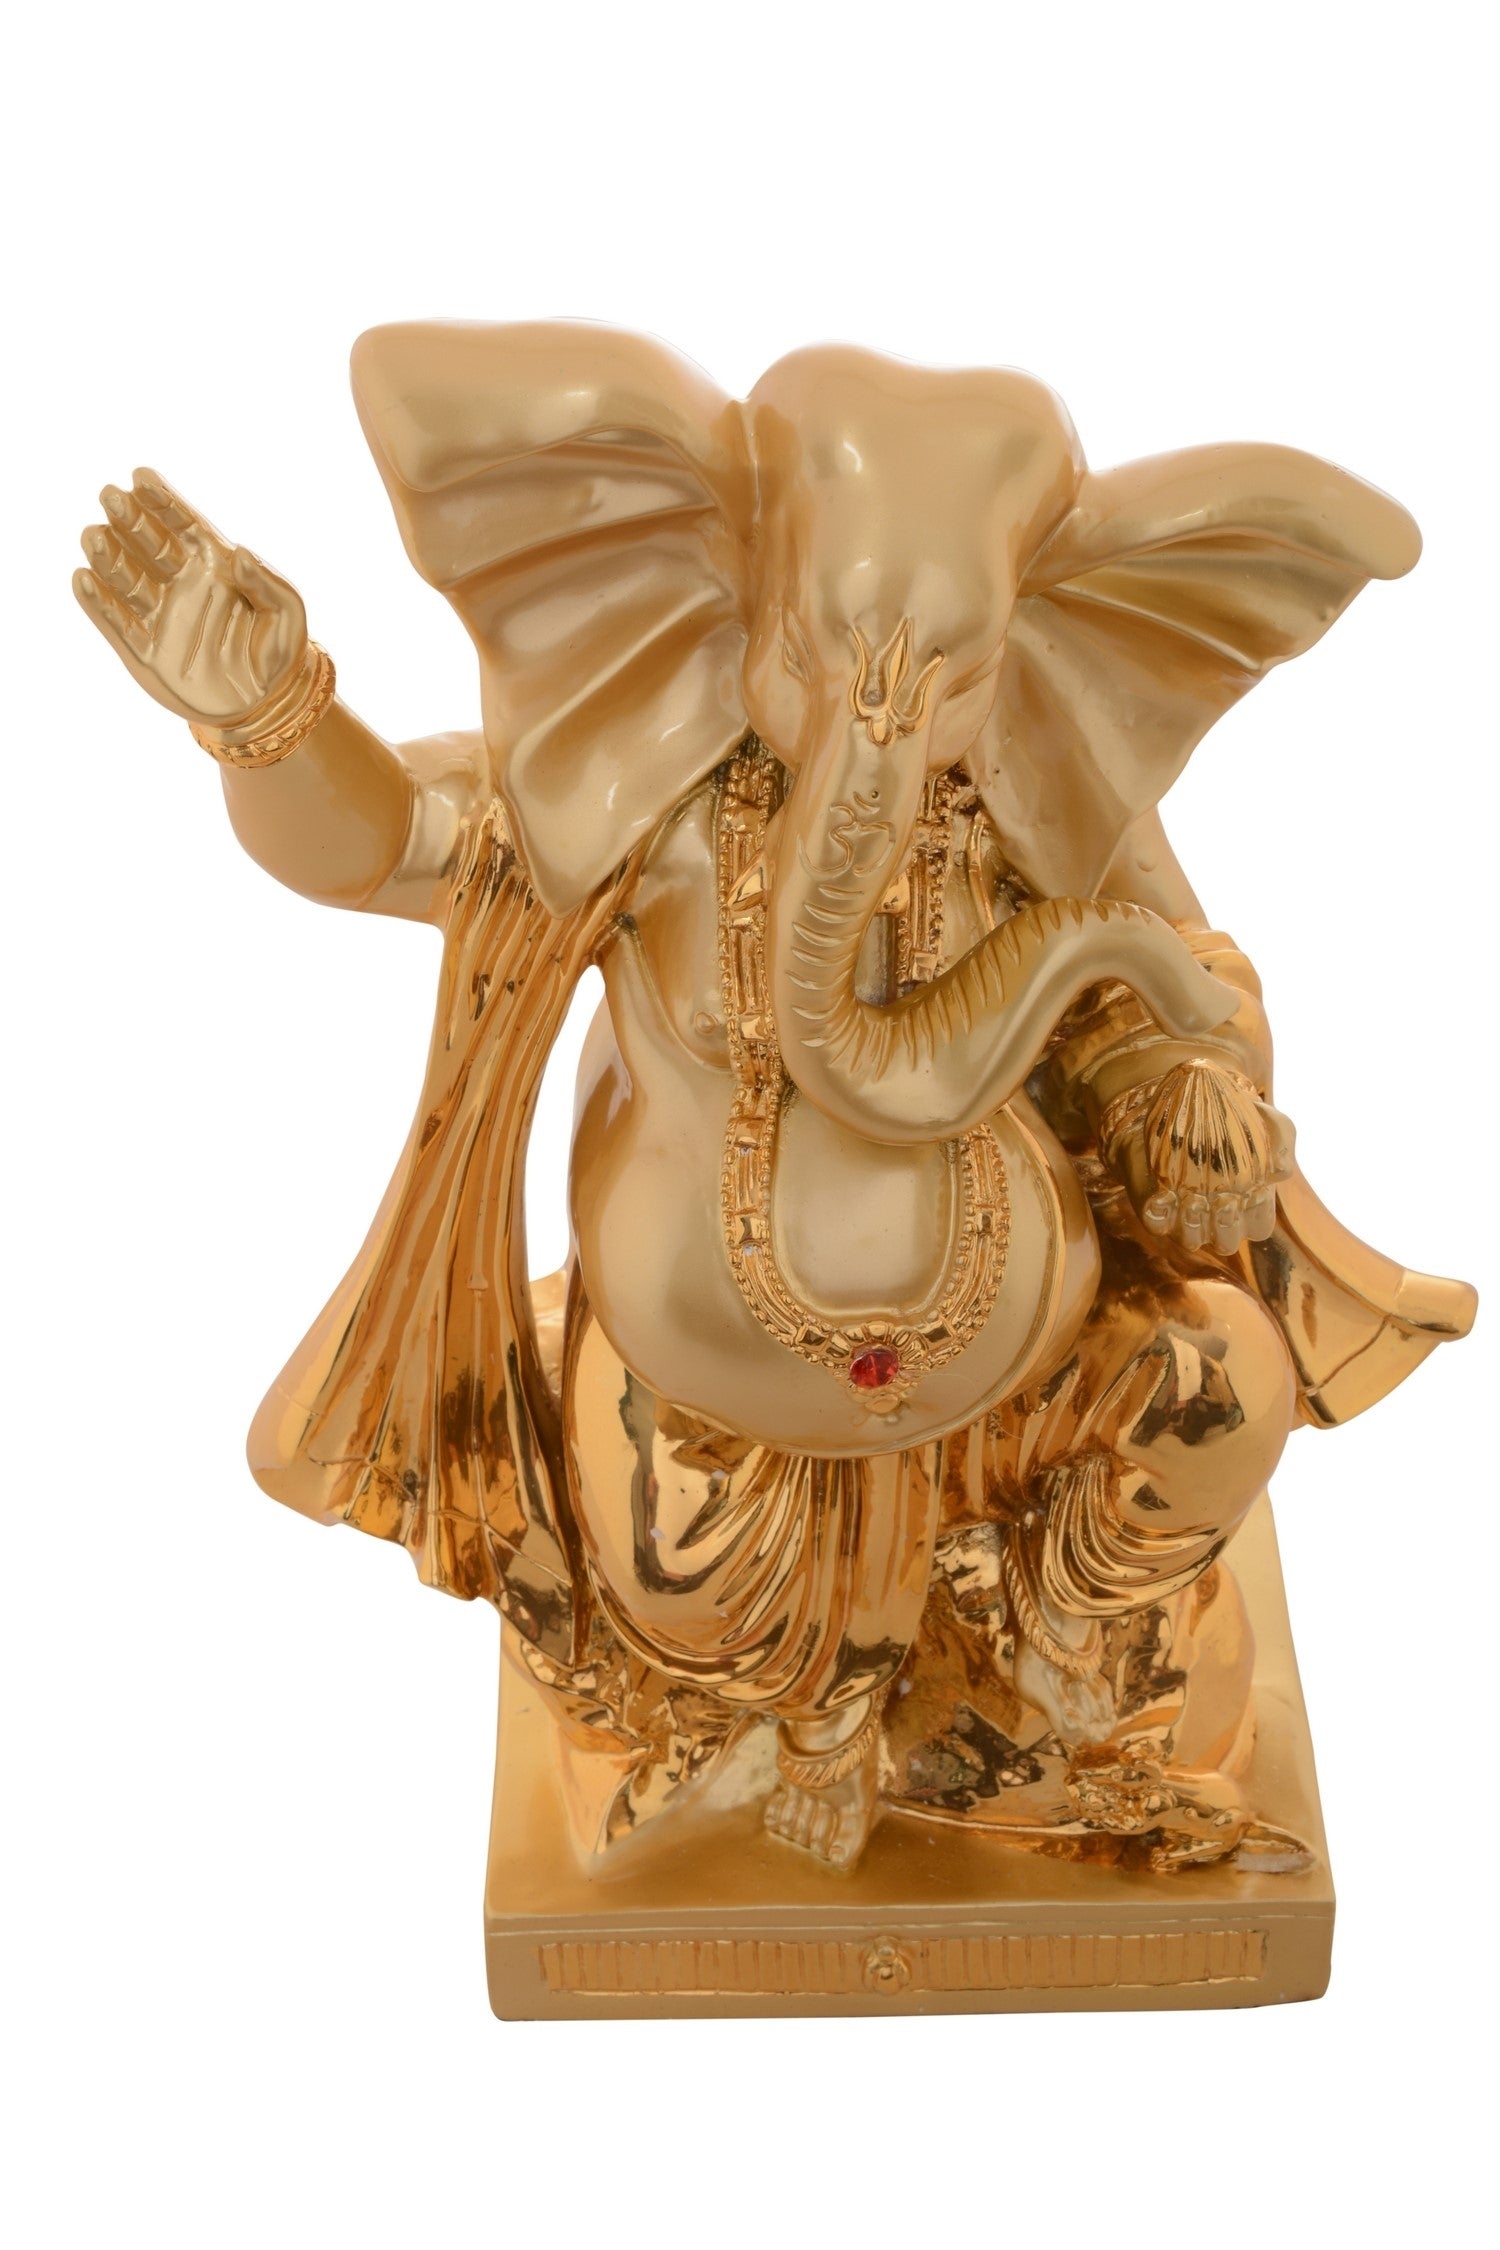 Premium Figurine of Lord Ganesha in Dancing Position 4